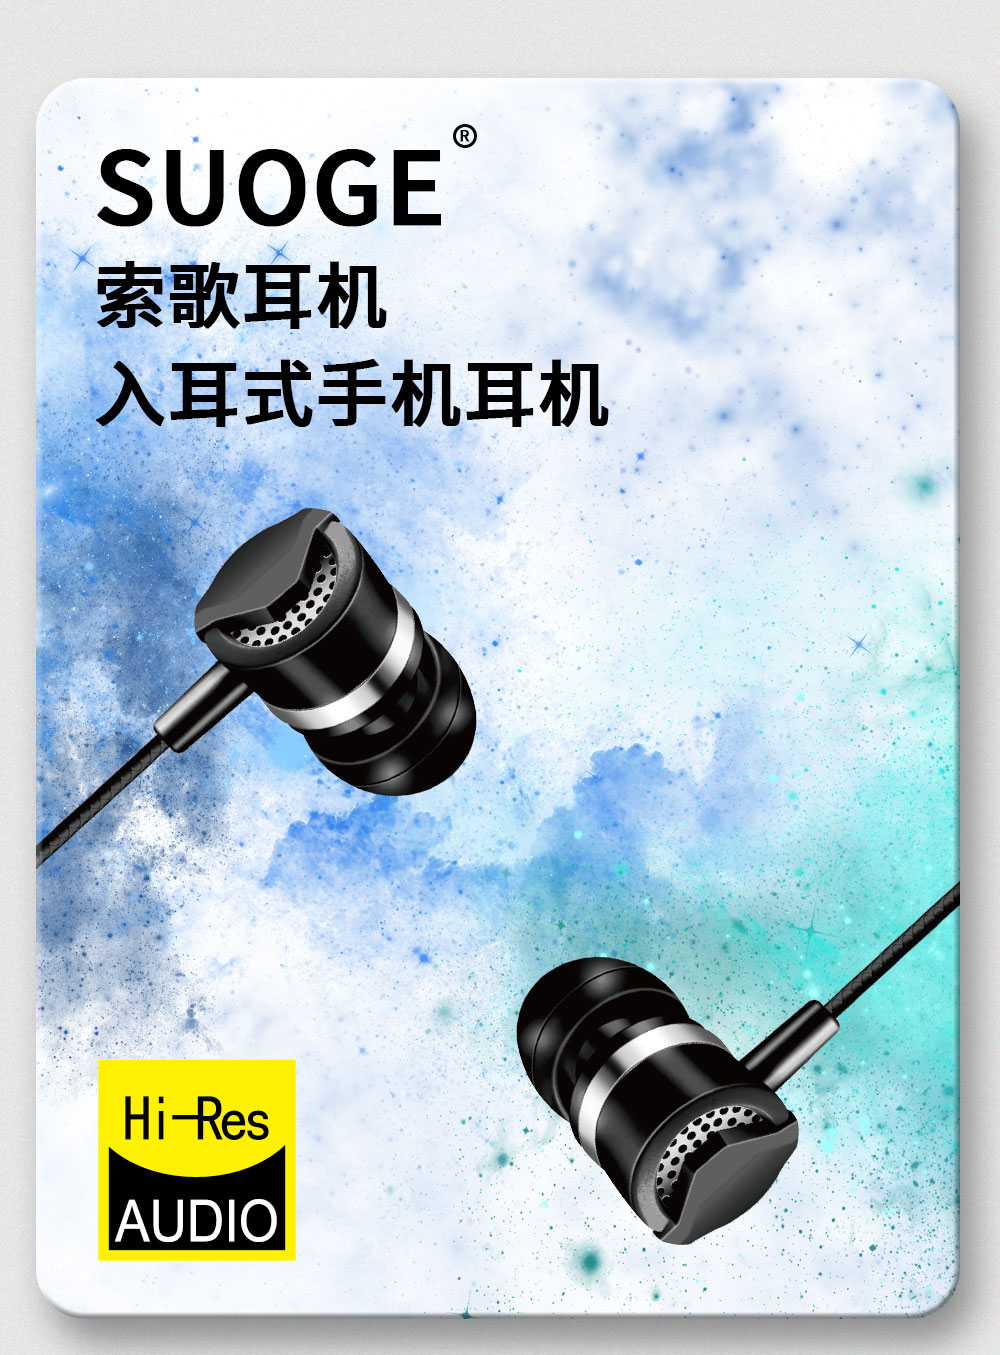 SUOGE索歌品牌SG-201手机耳机详情1